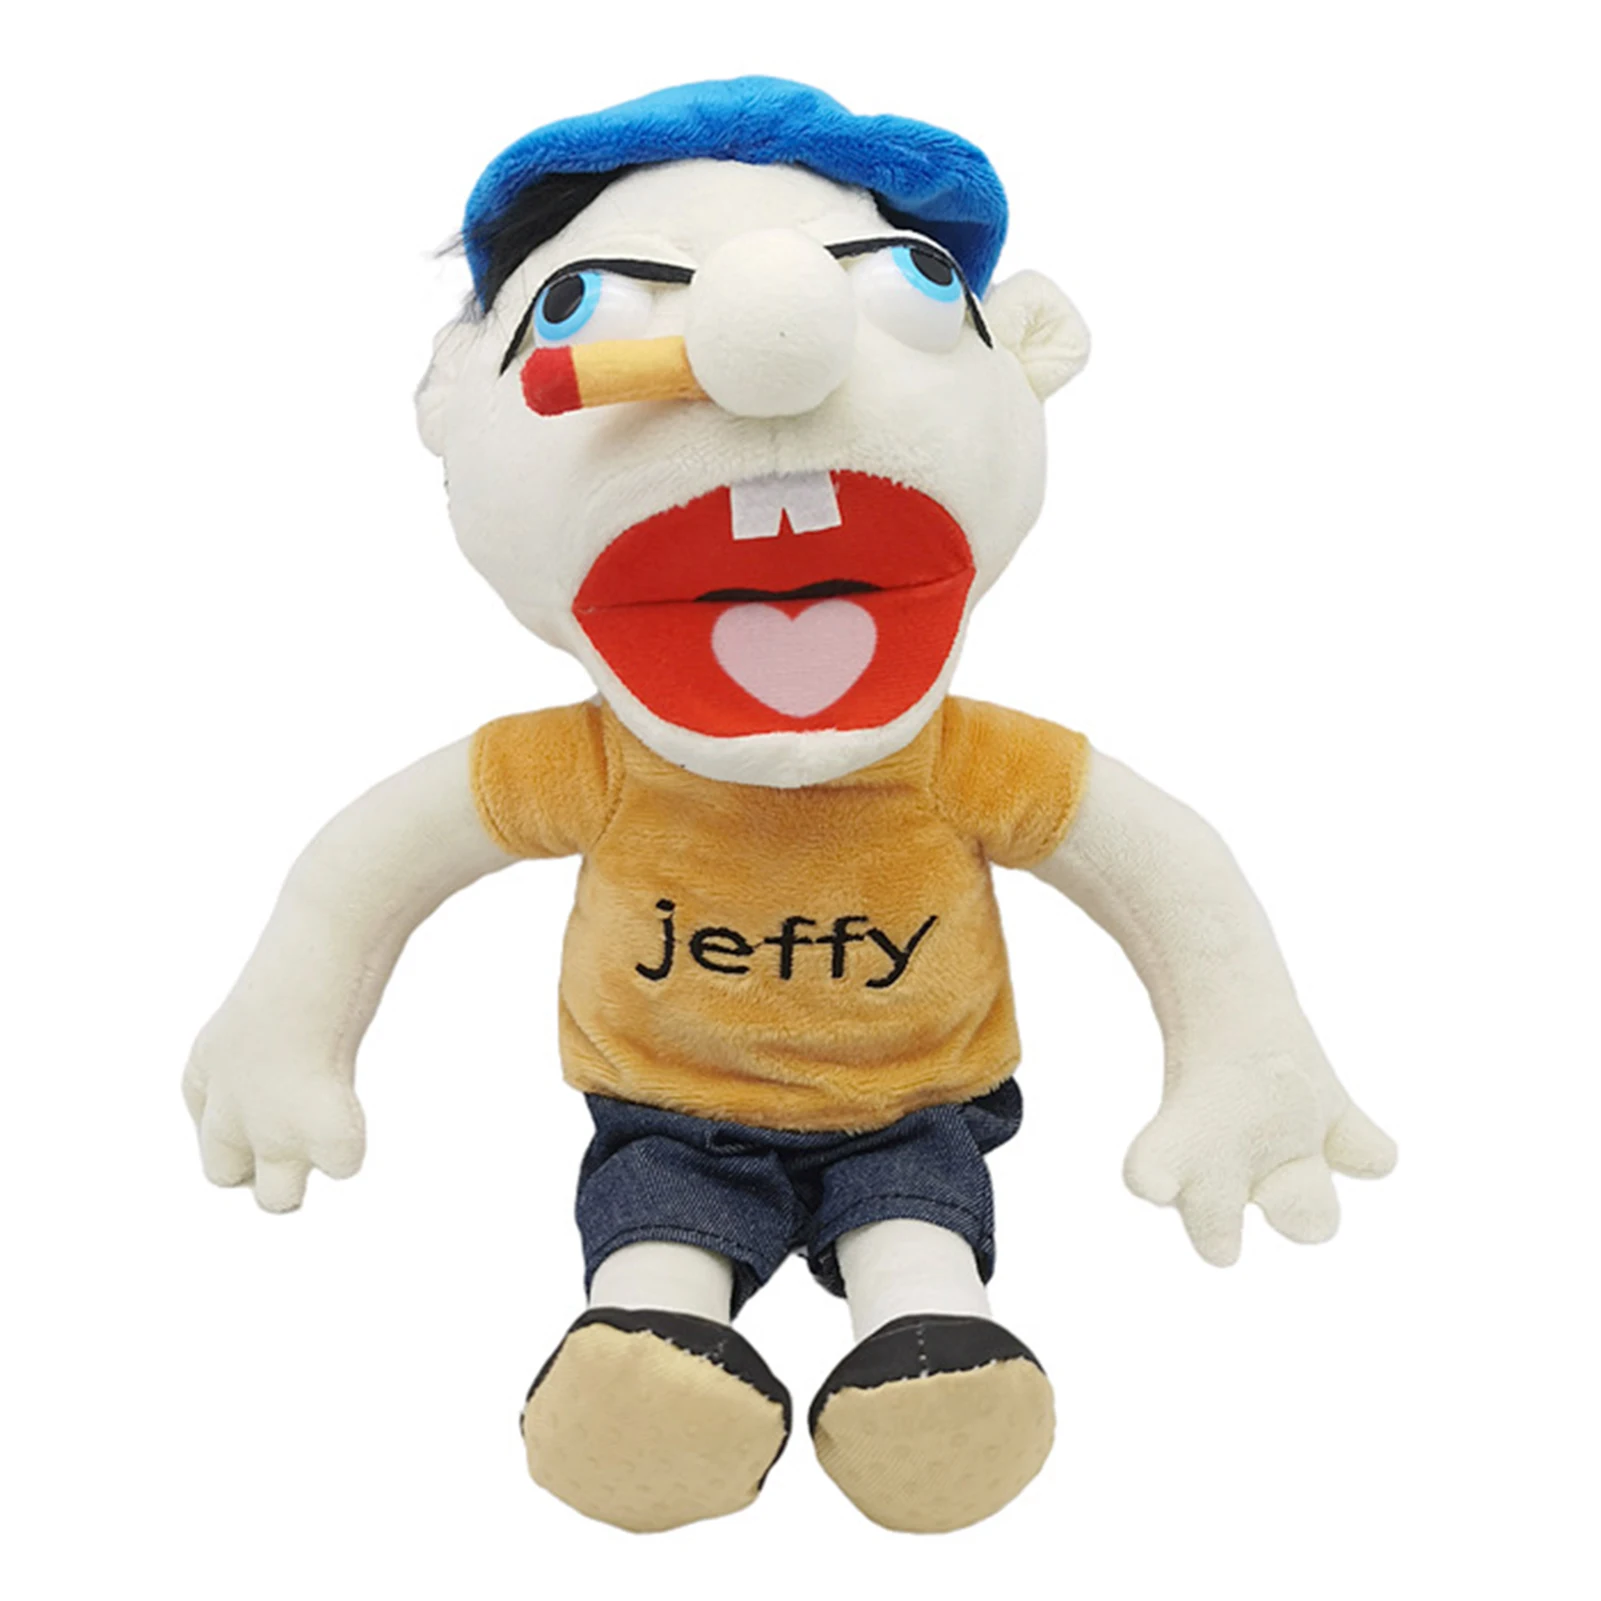 

Jeffy Hand Puppet Cartoon Plushie Toy Stuffed Doll Soft Figurine Sleeping Pillow Educational Playhouse Kids Children Baby Gift